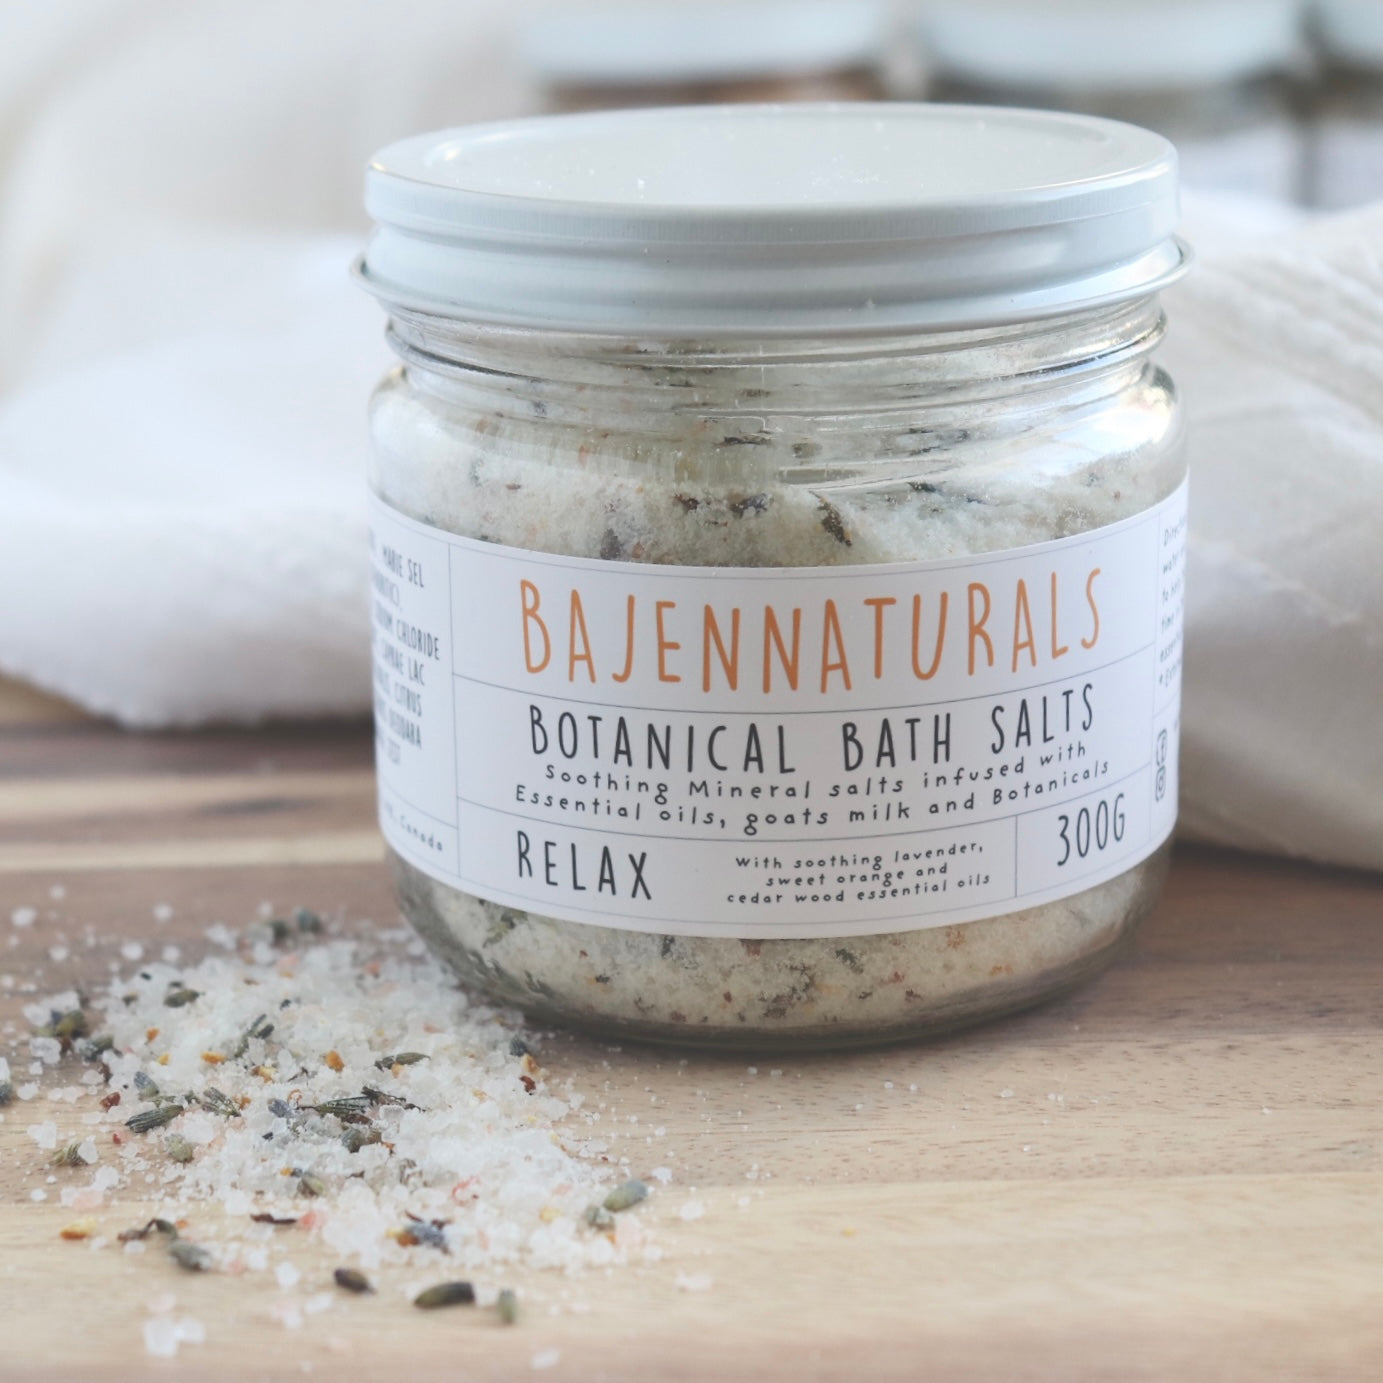 Relax - Botanical Bath Salts